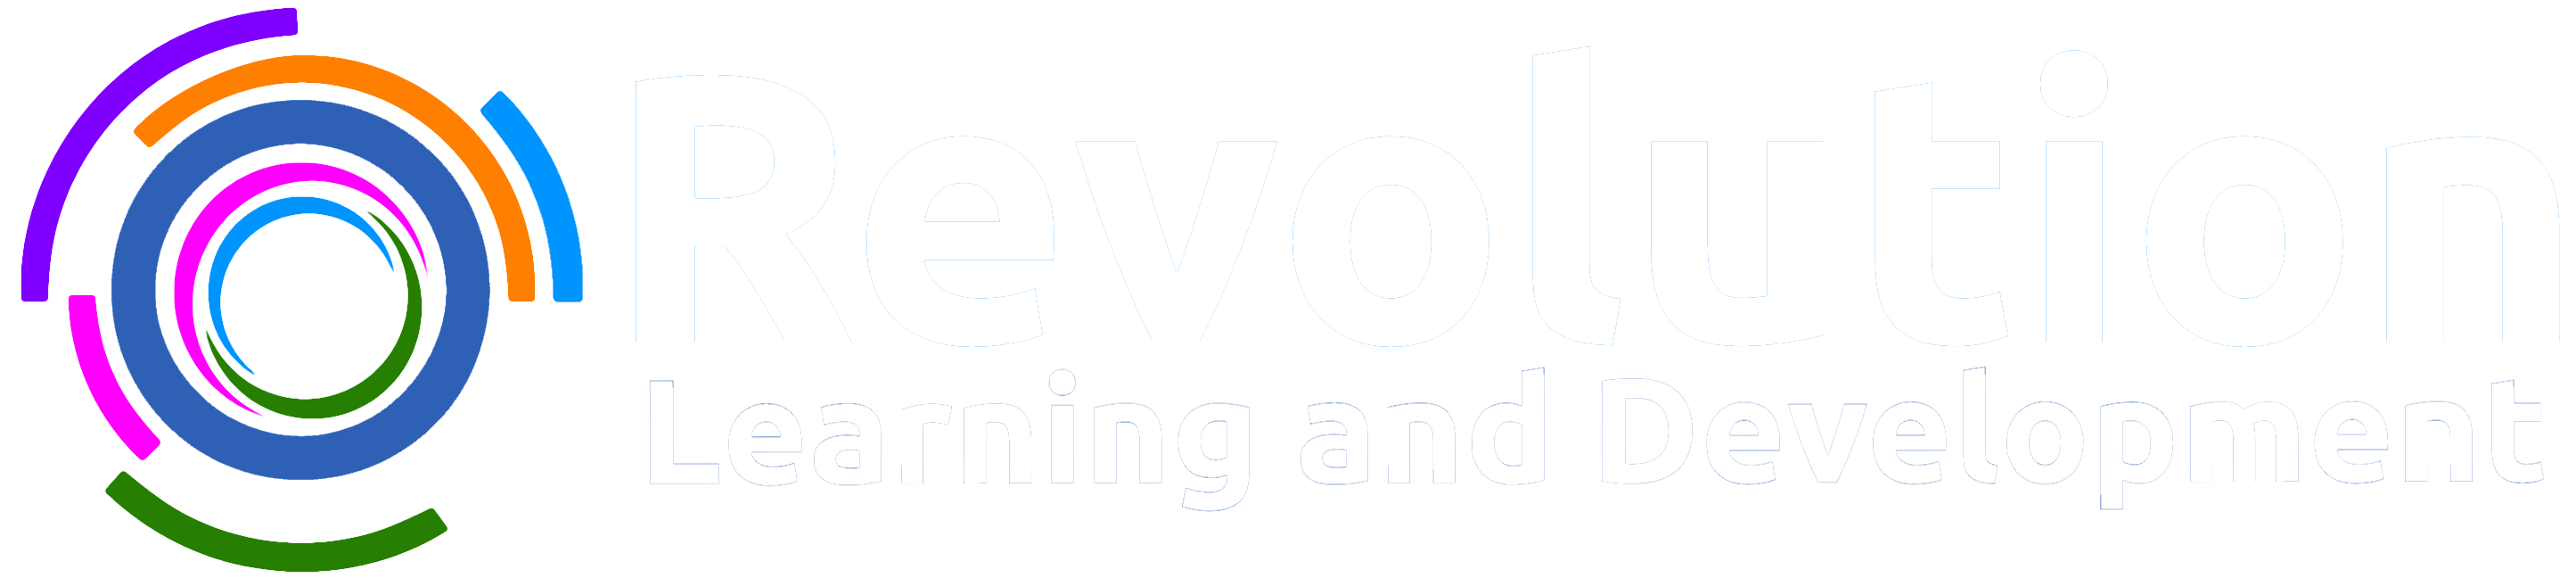 Revolution Learning and Development – Oman